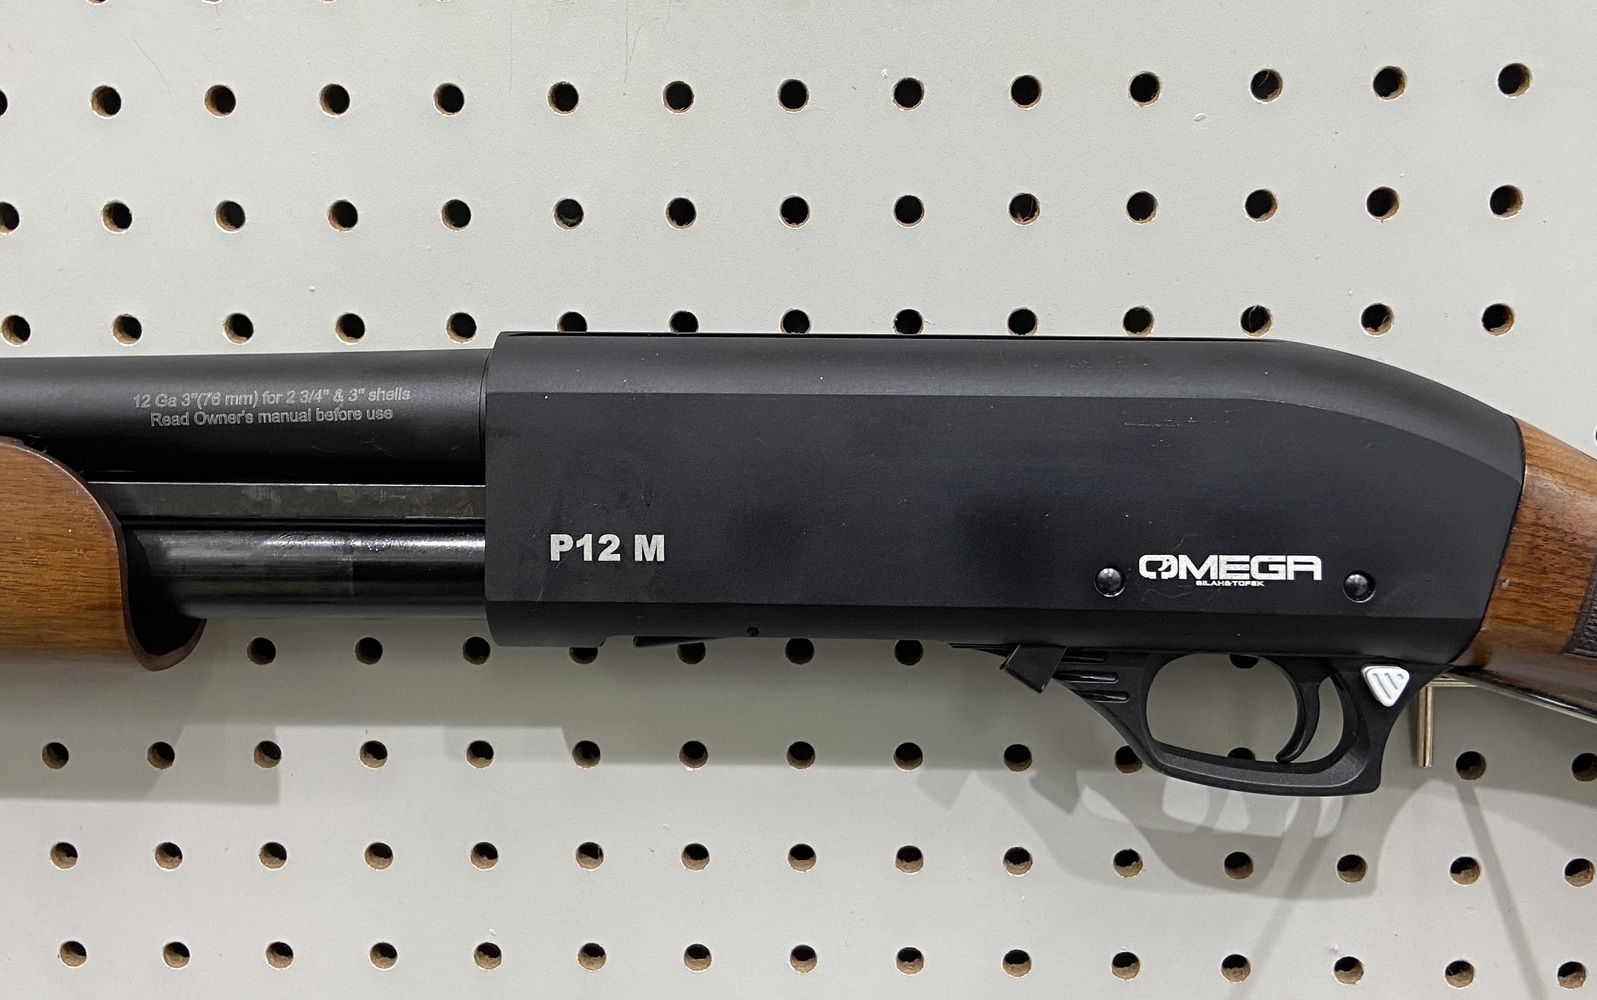 Omega P12m 12ga pump shotgun